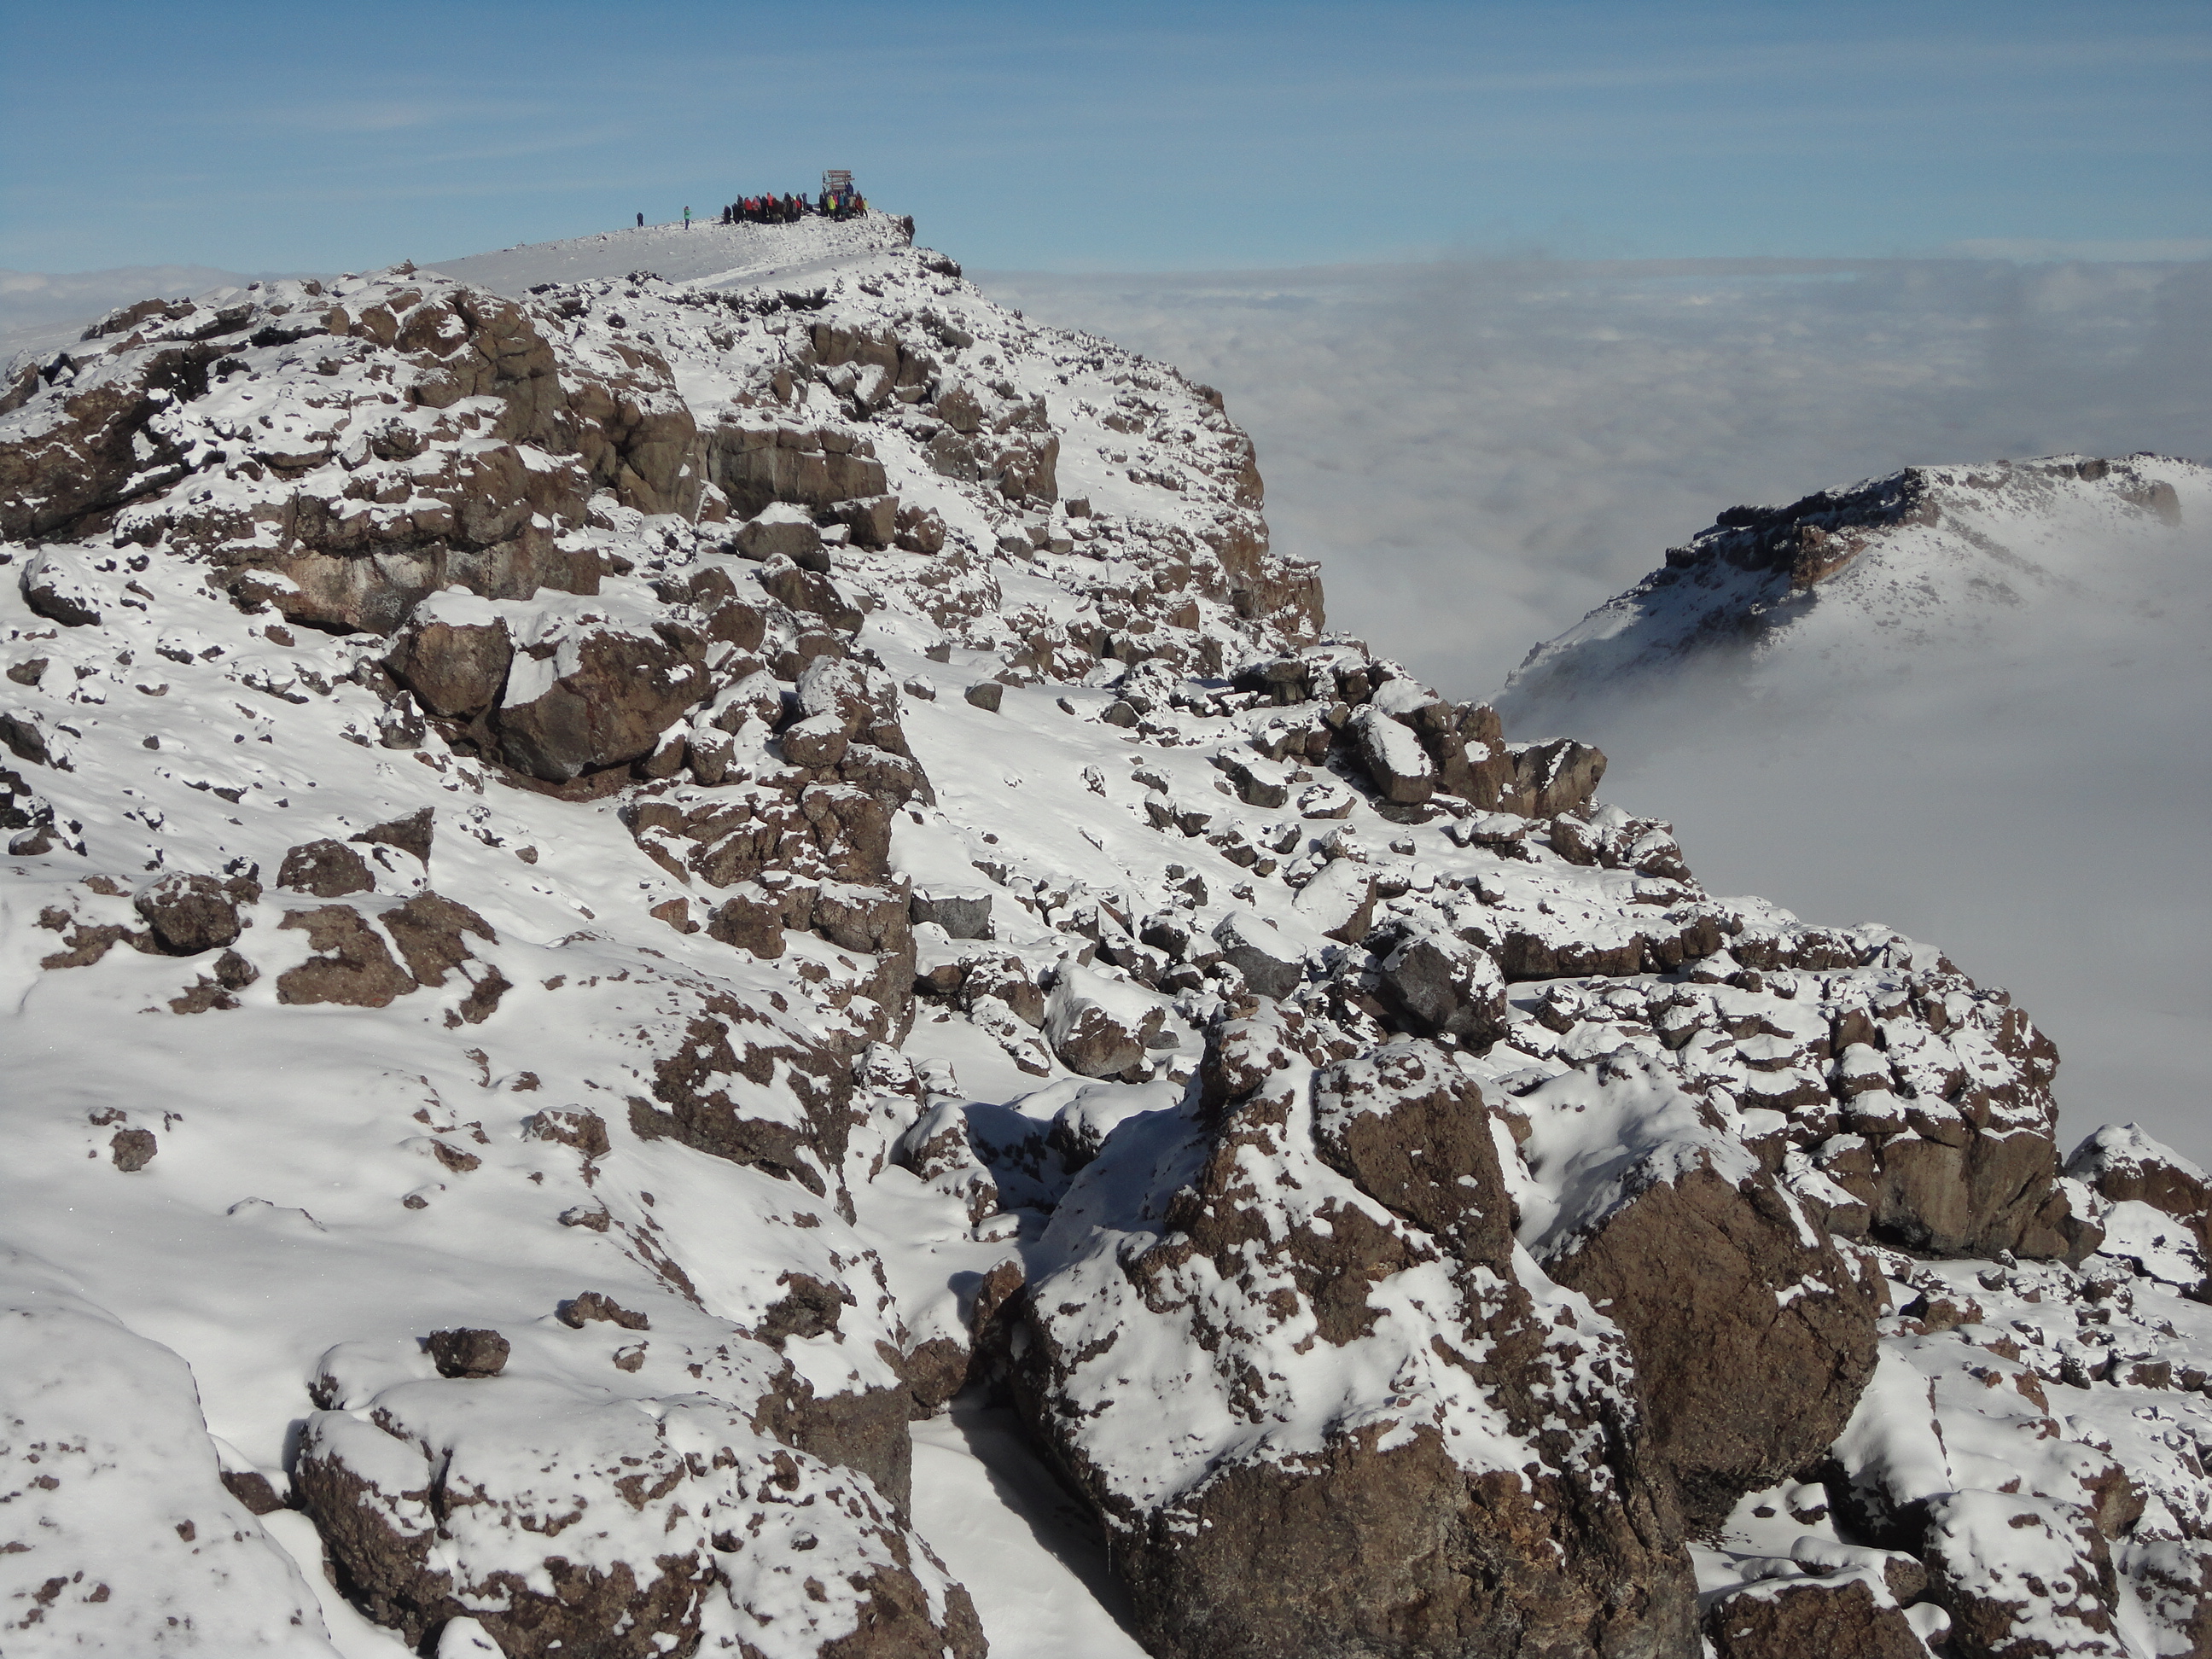 Looking Towards the Summit of Kilimanjaro